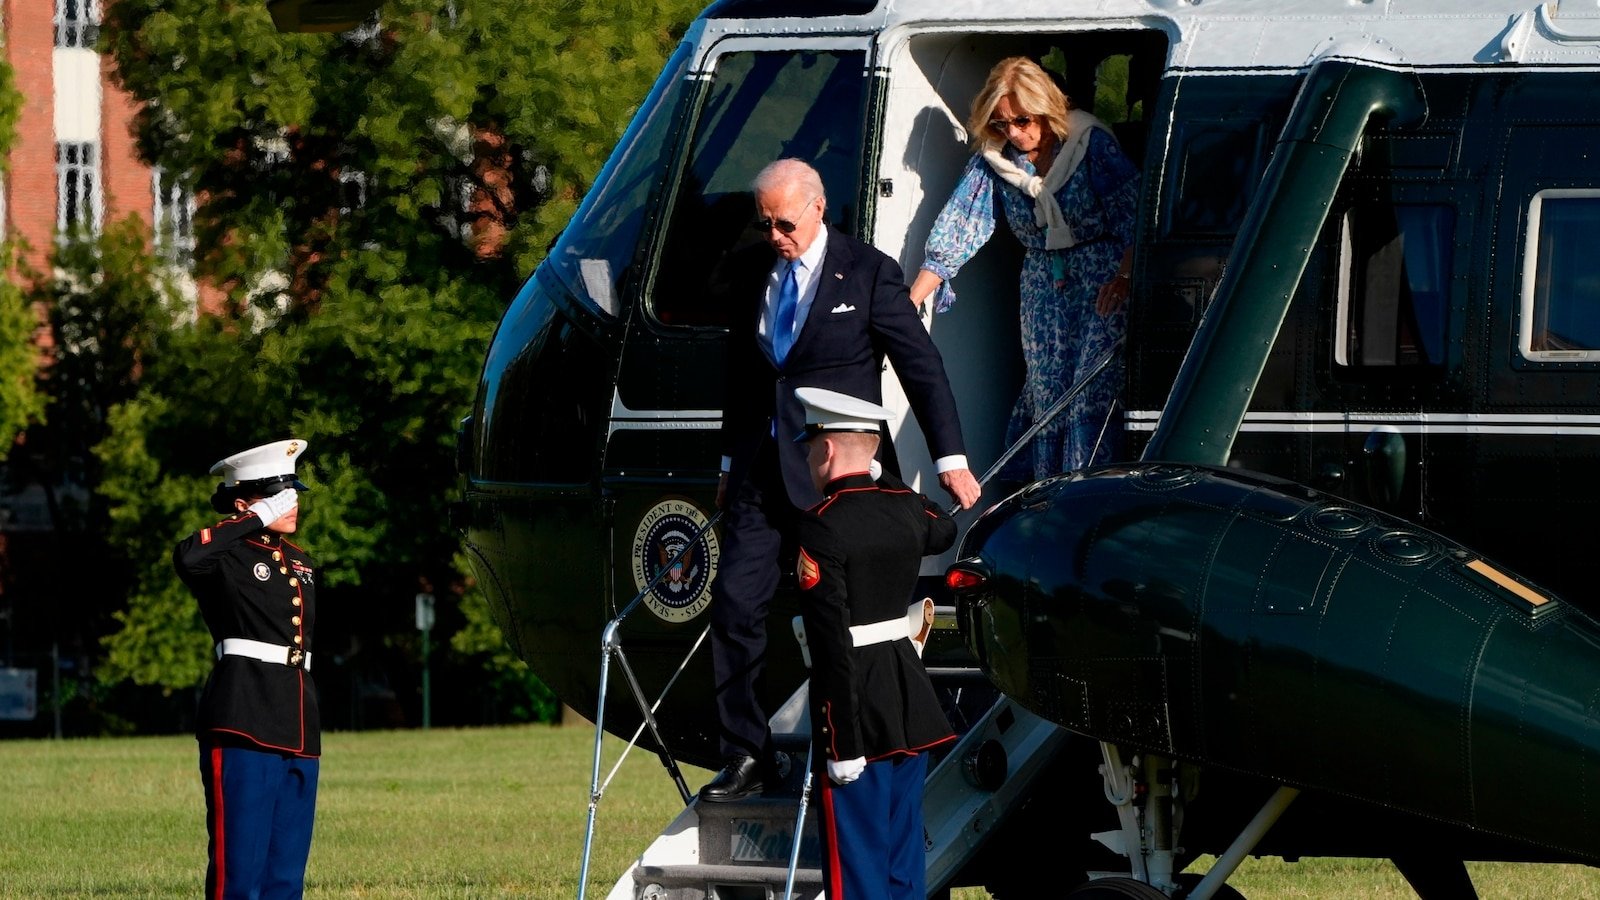 Biden privately signals 'open mind' on path forward, next few days critical: Sources